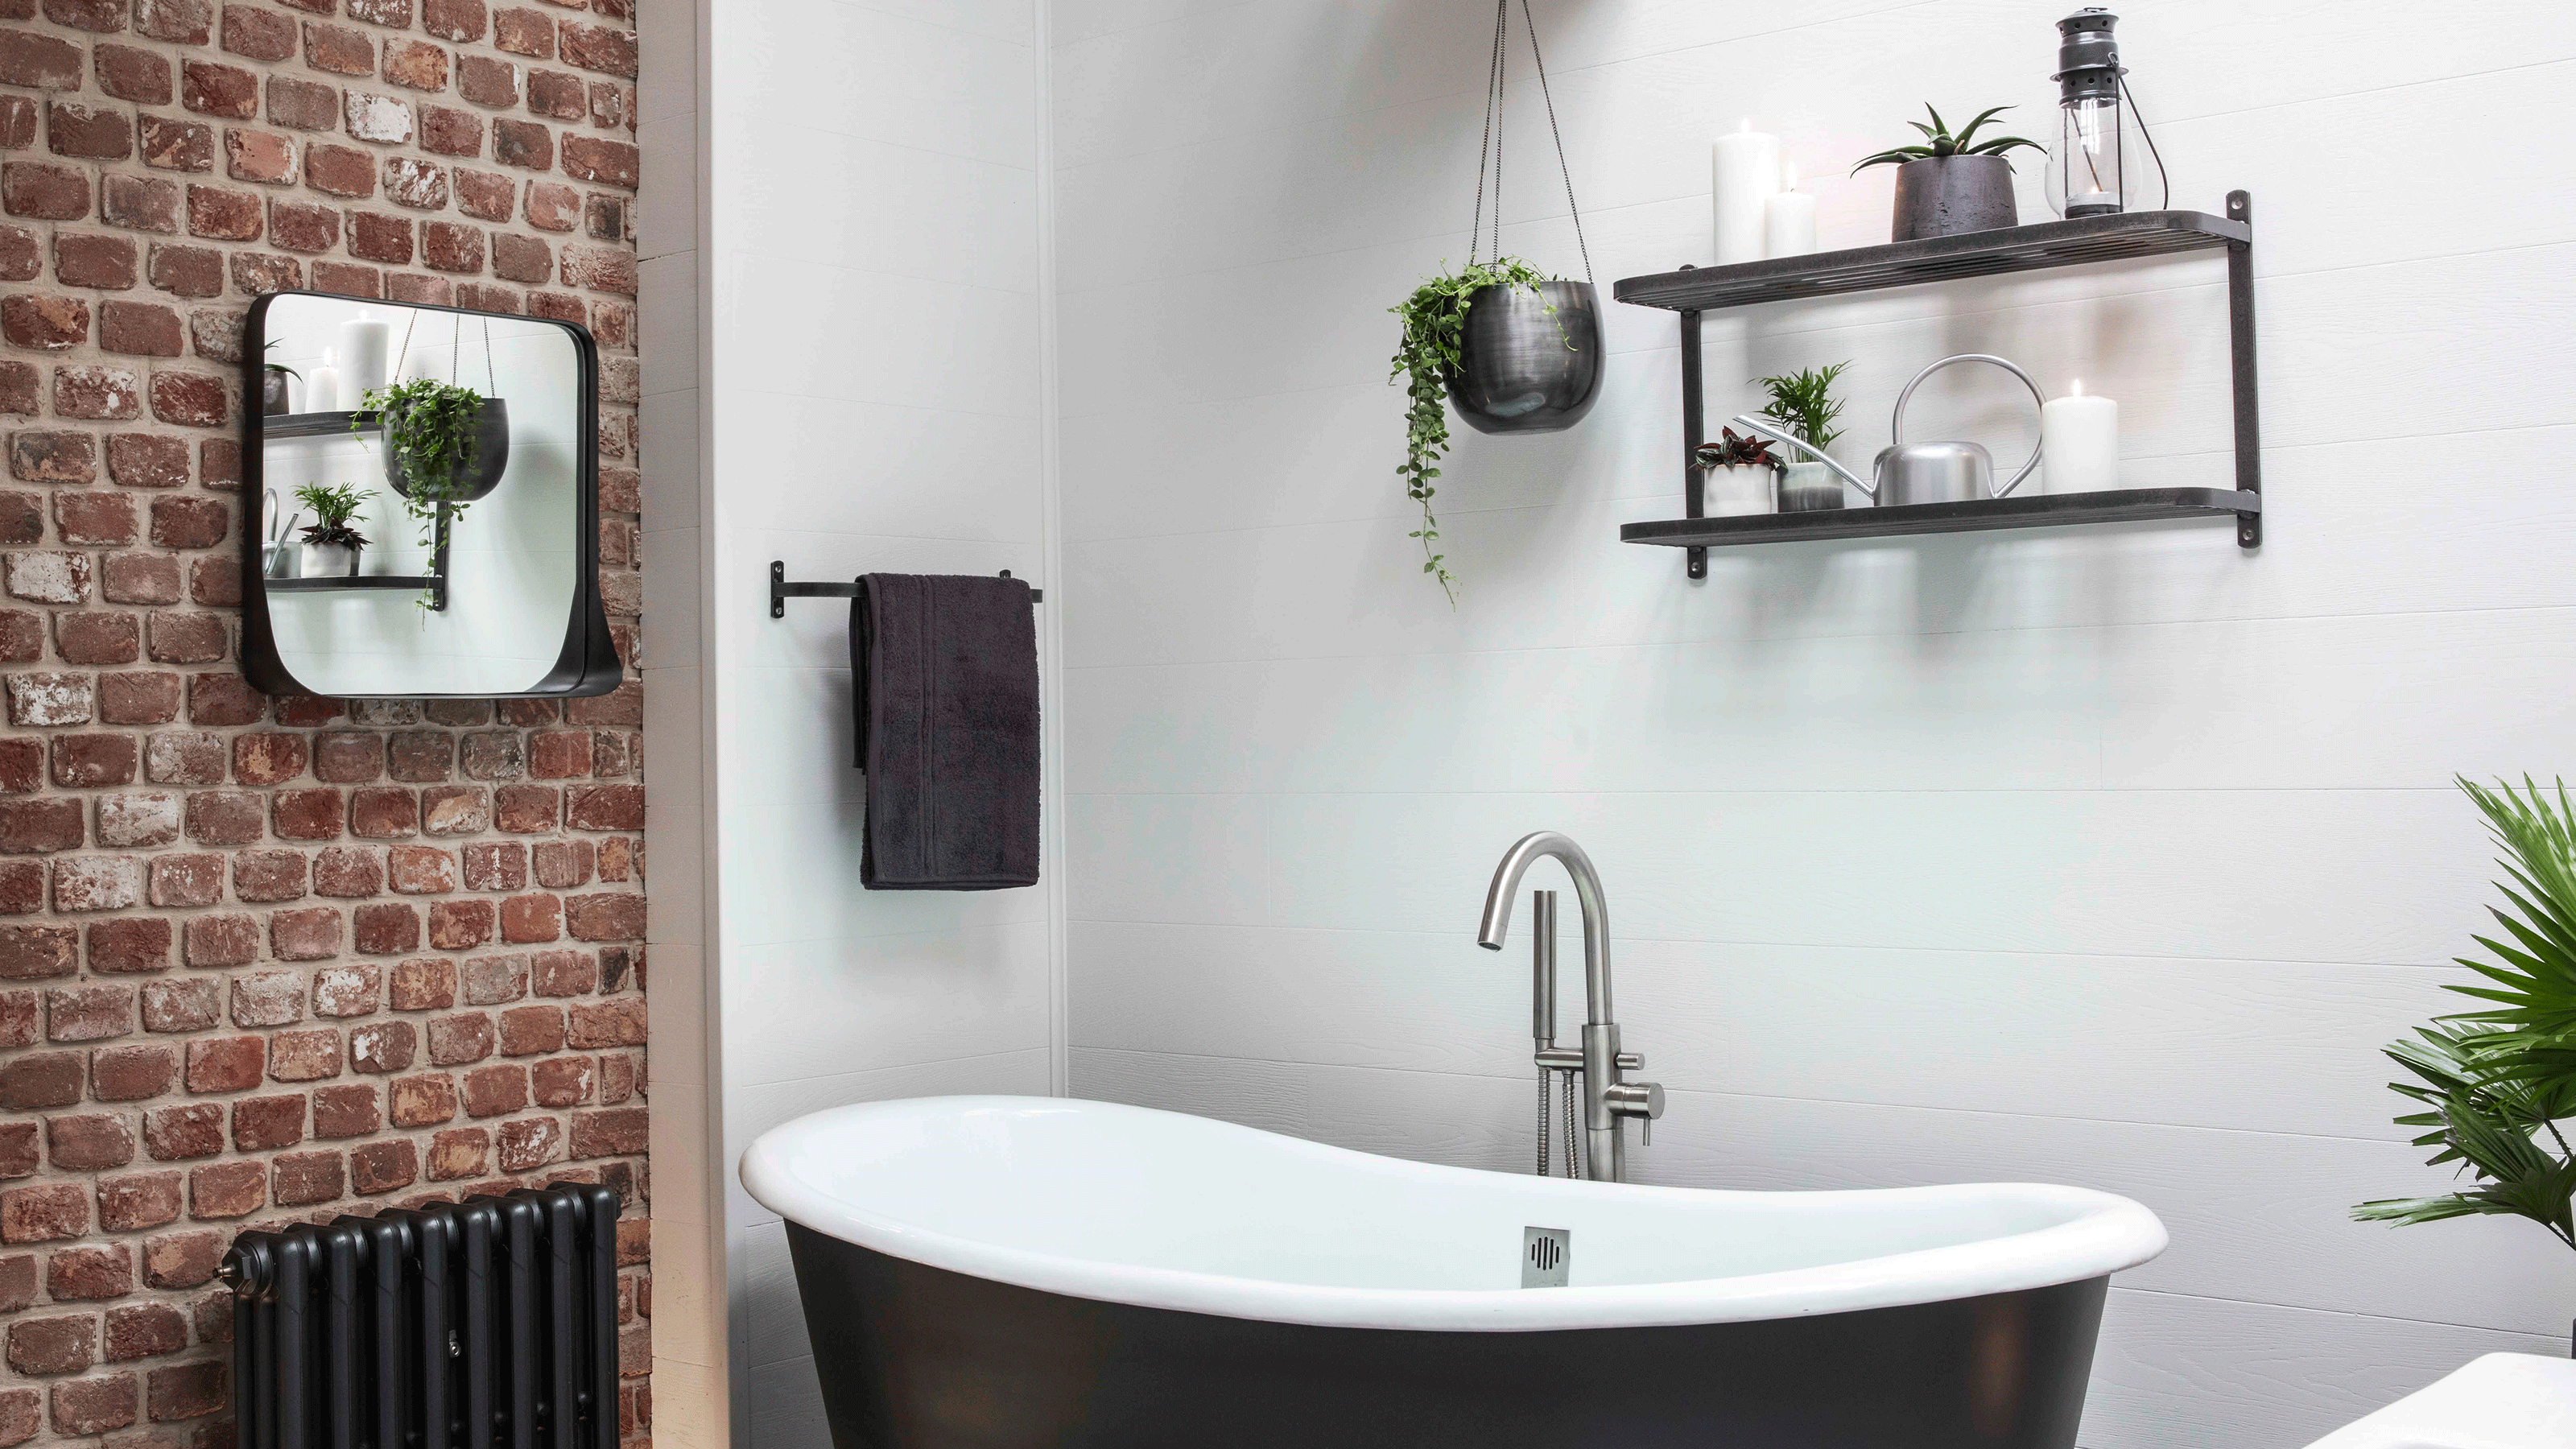 Black two-tier shelving unit above black freestanding bath tub in brick-exposed industrial bathroom